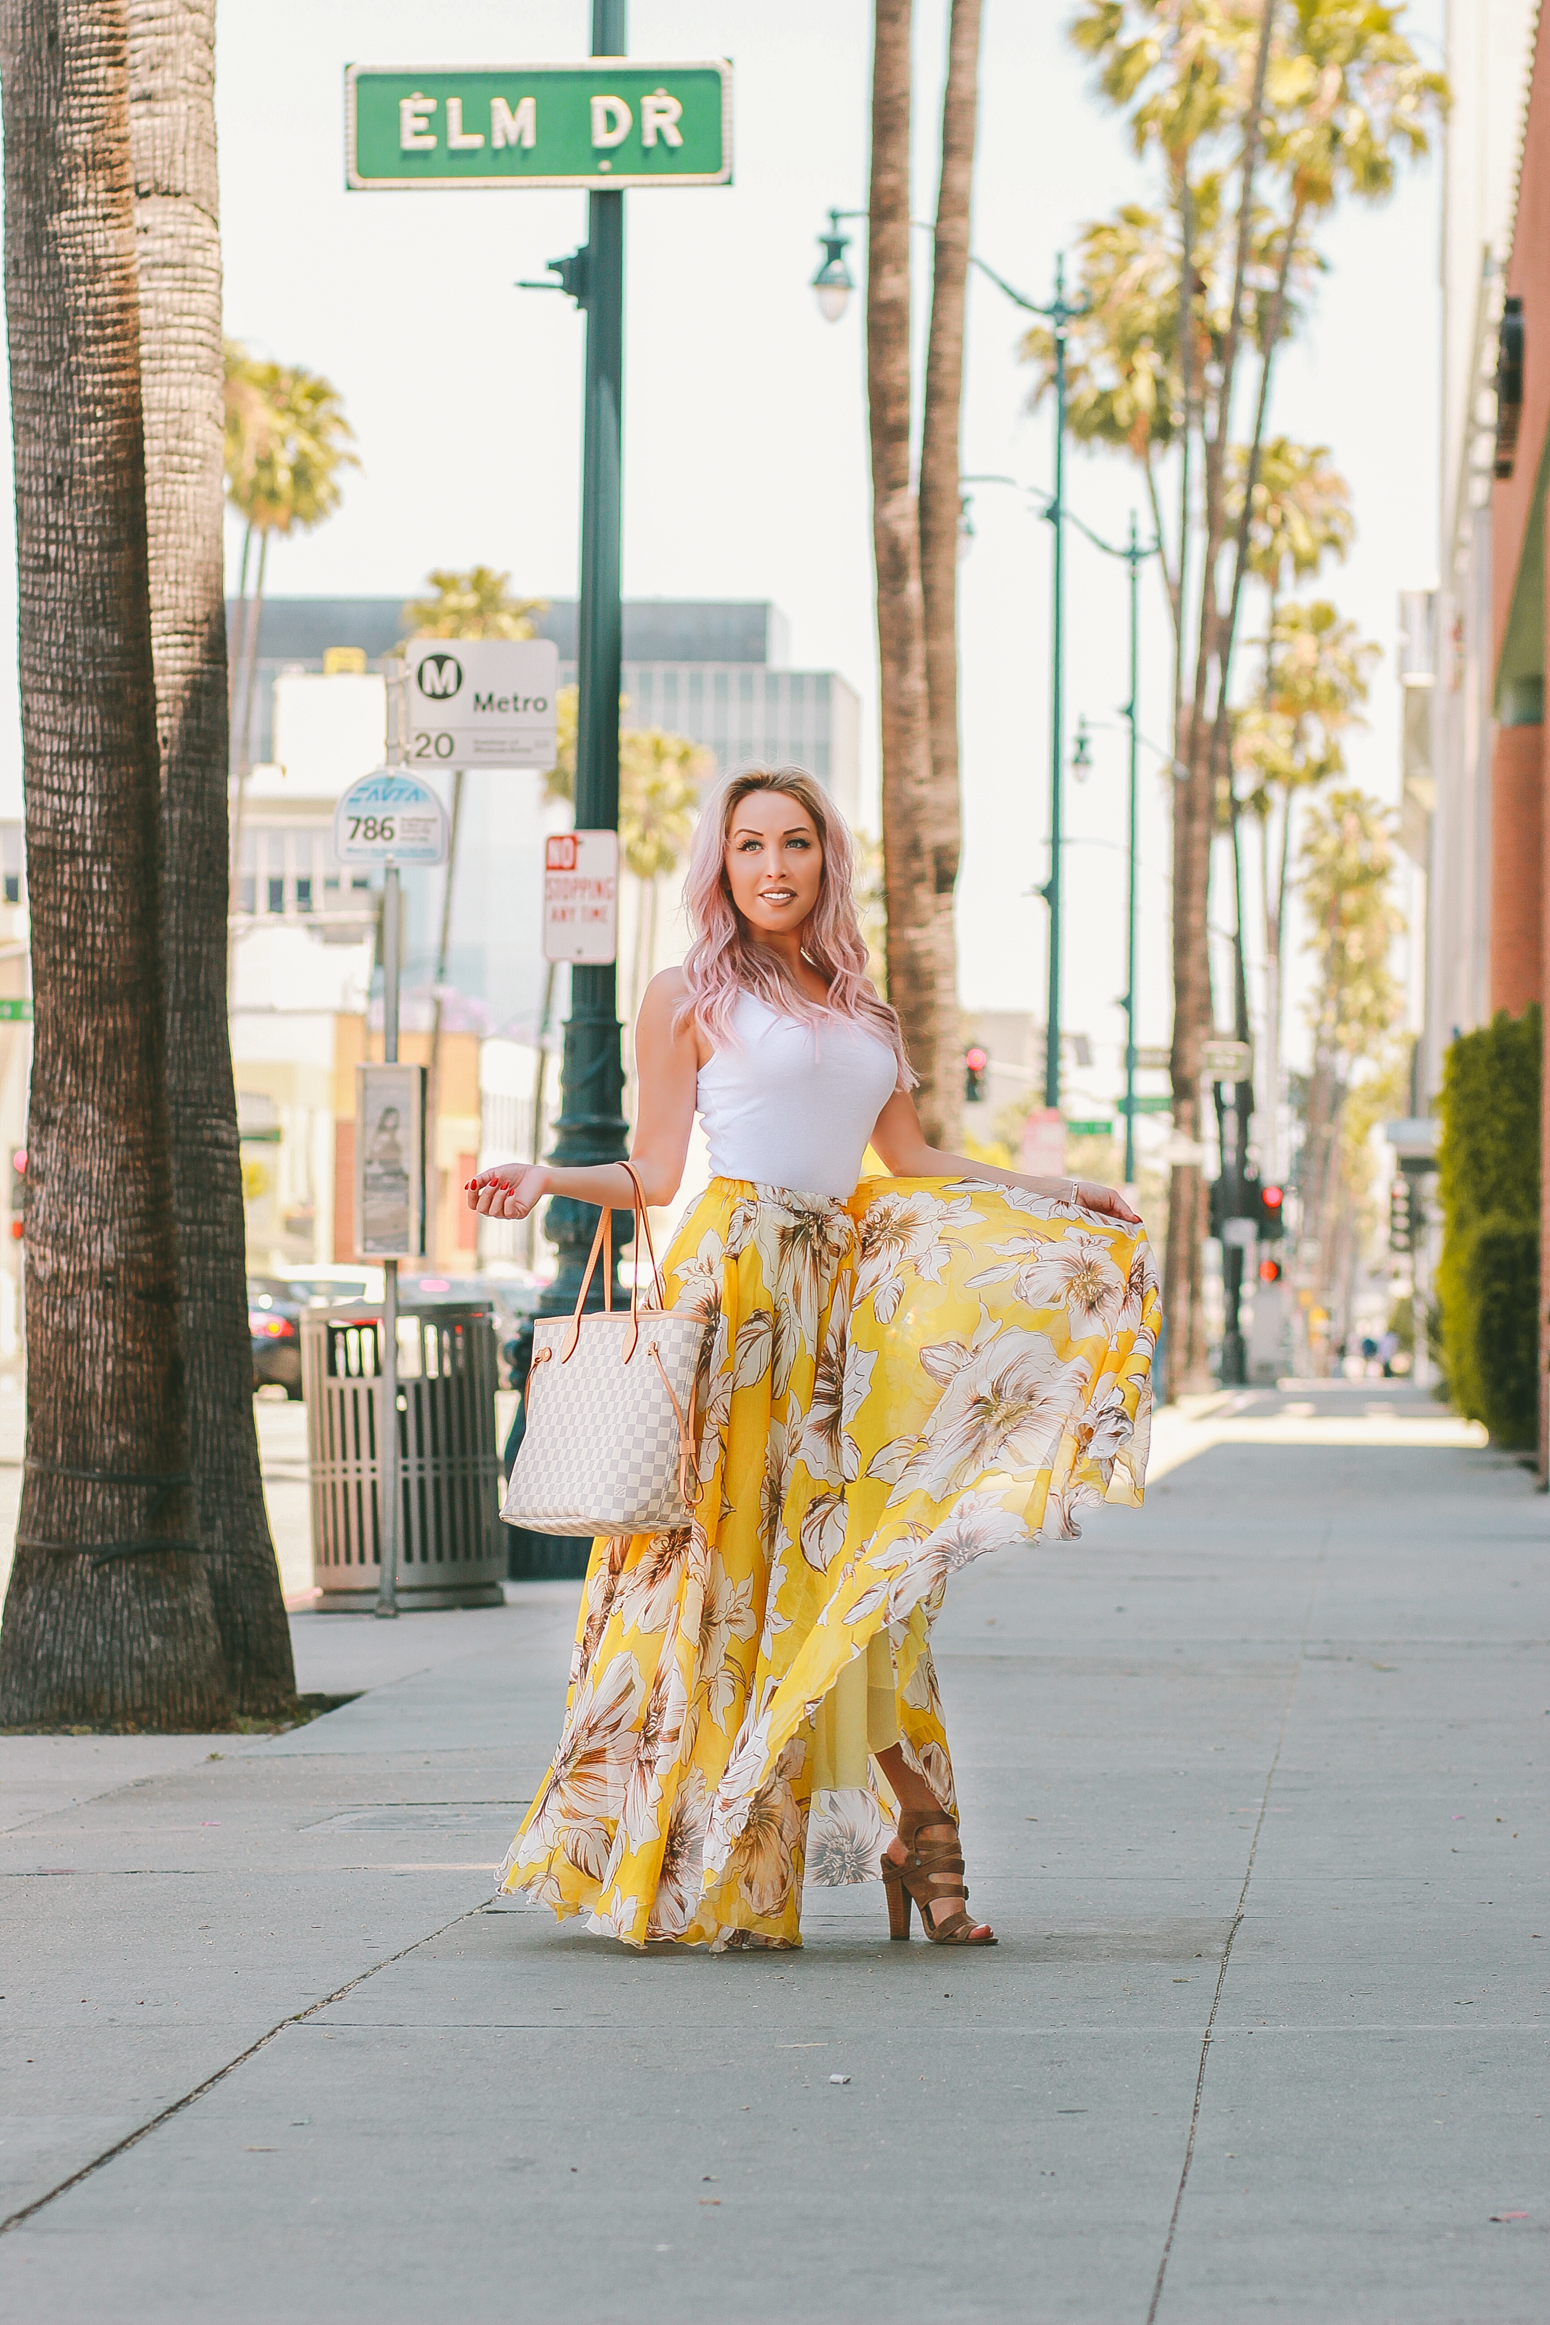 Blondie in the City | Flowy Yellow Summer Skirt @chicwish